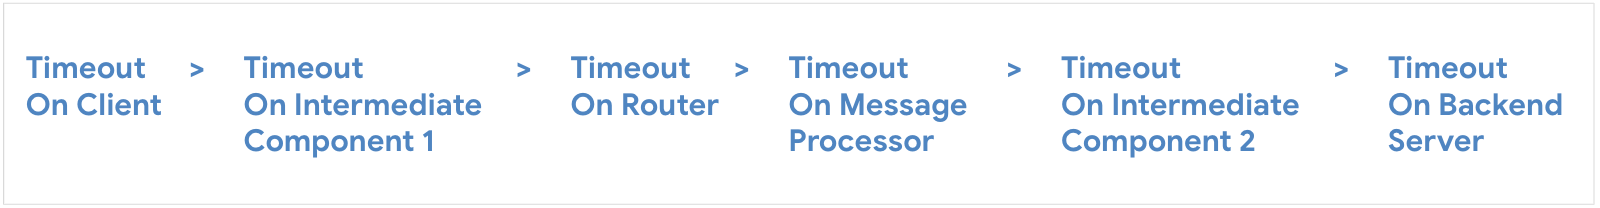 Configure timeout on client, then Intermediate Component 1, then Router, then Message Processor, then Intermediate Component 2, then Backend Server